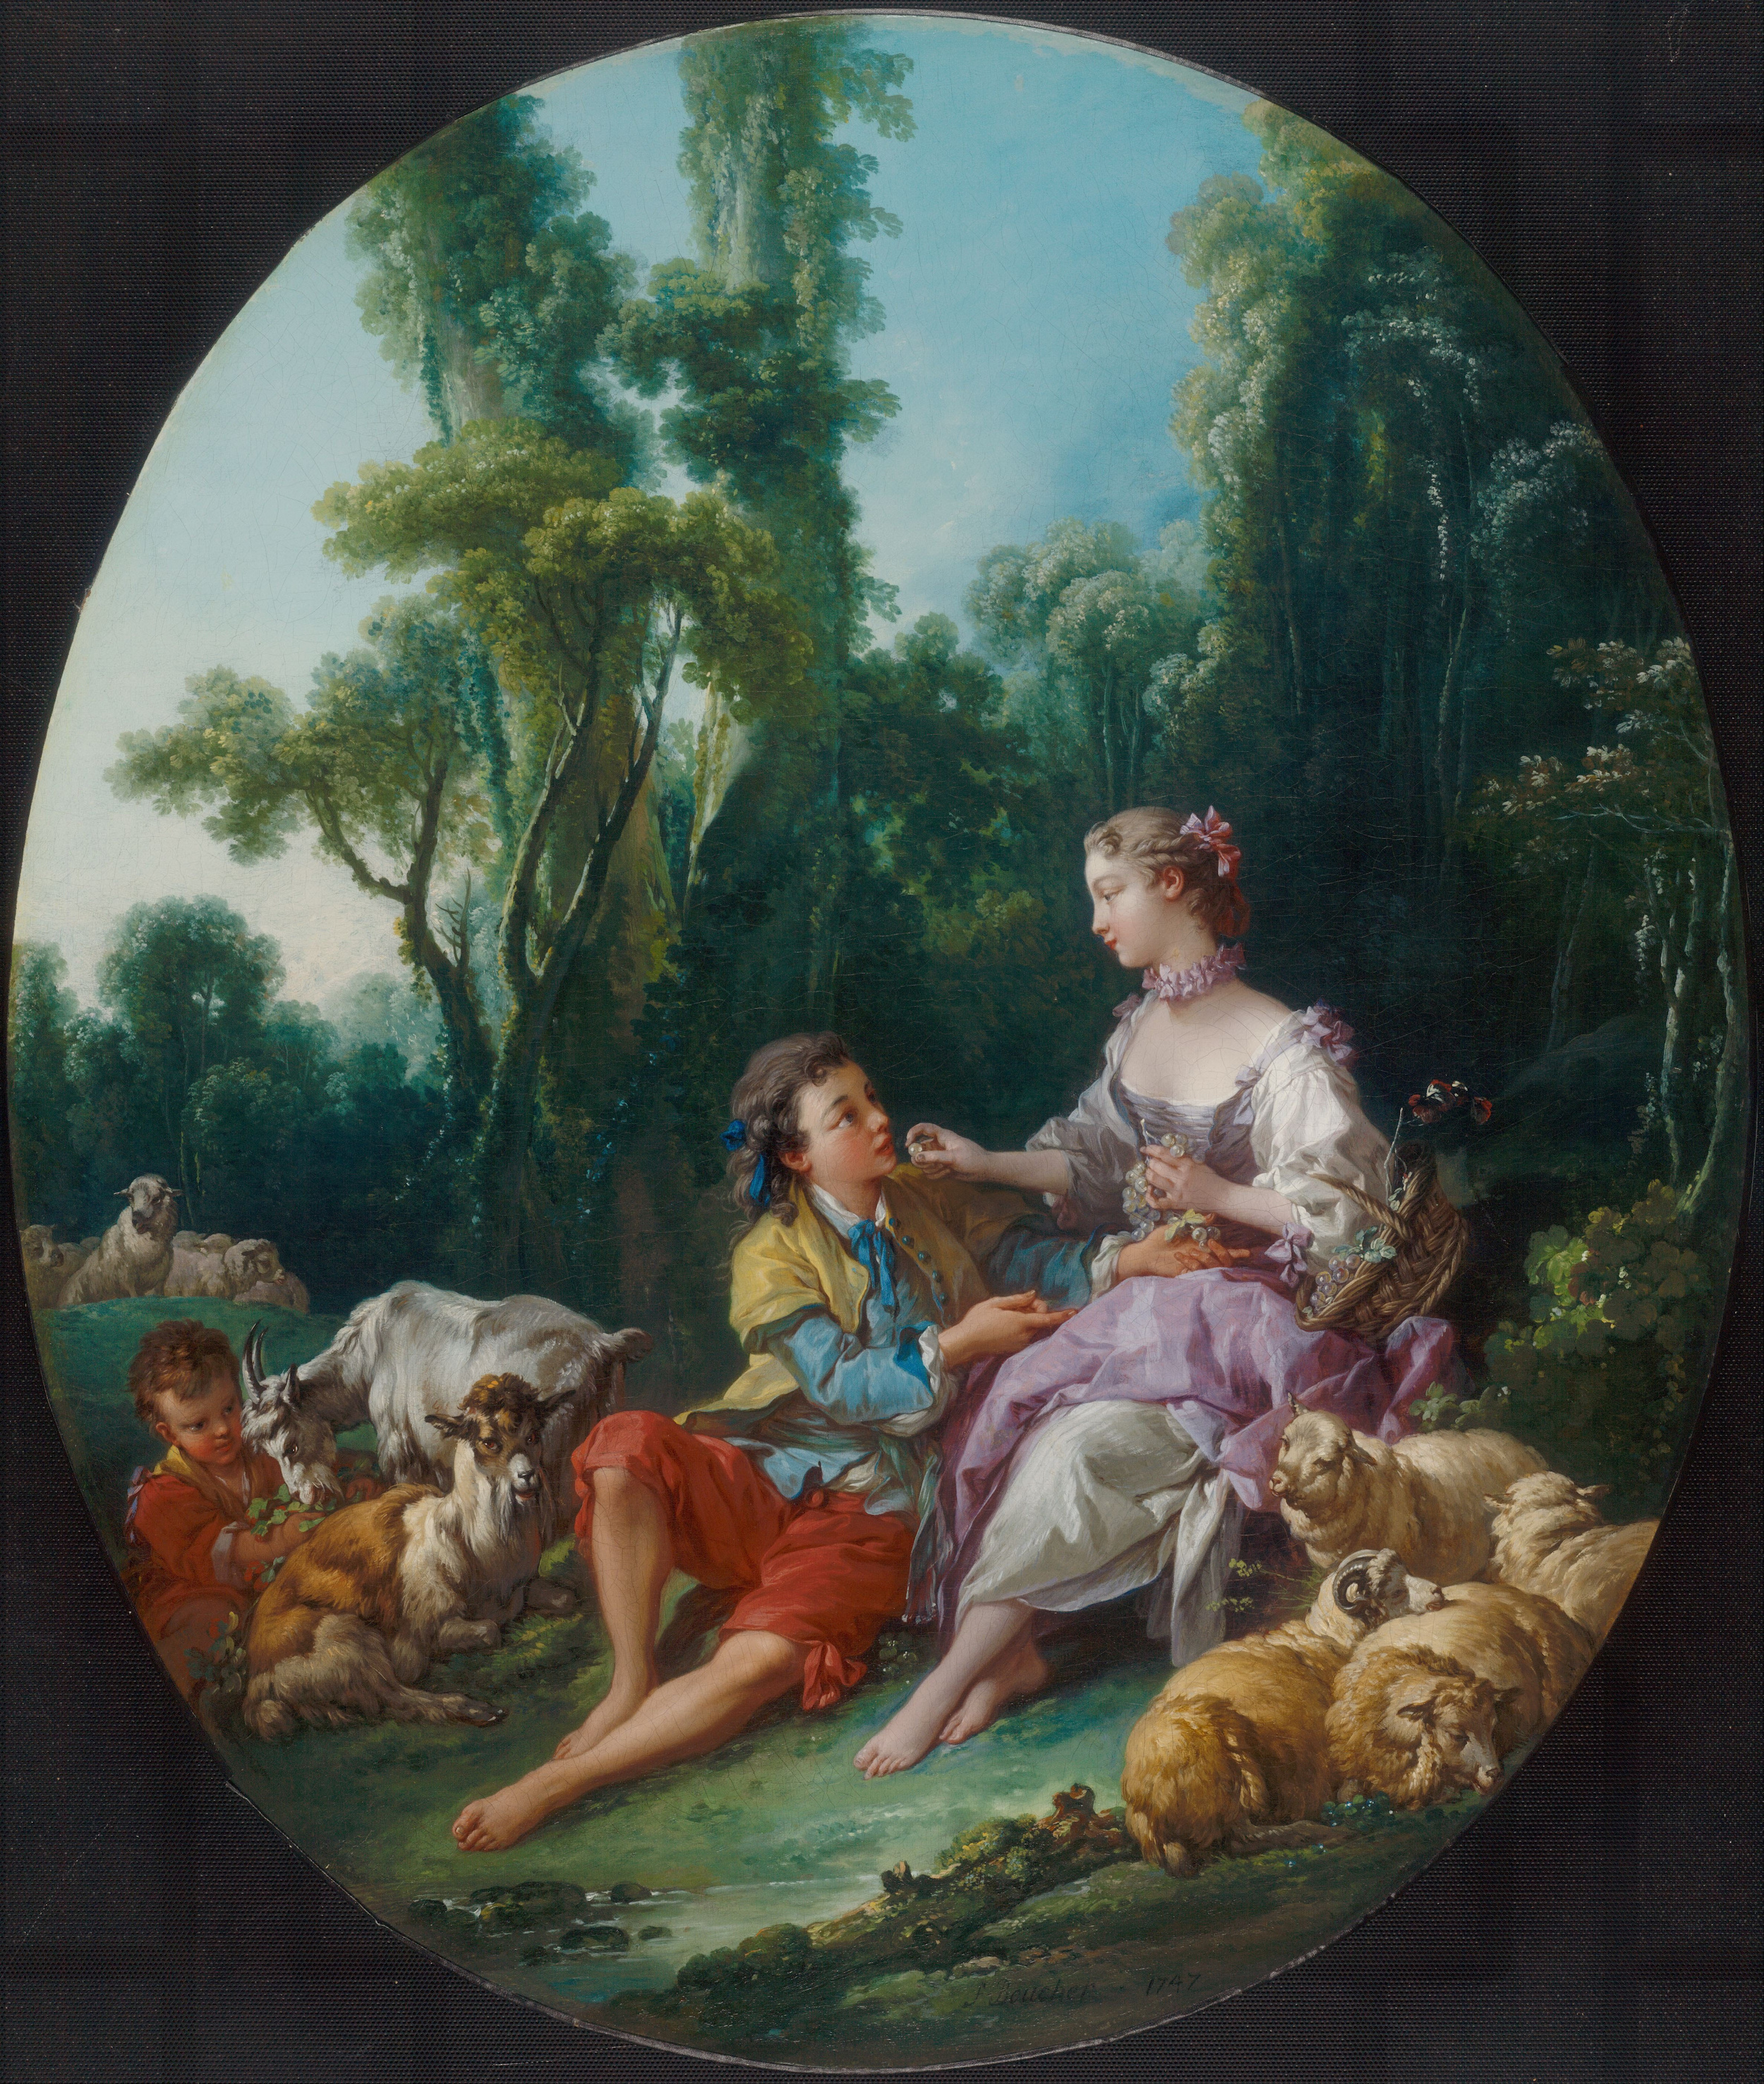  Oare la ce se gândesc ei? by Francois Boucher - 1747 - 80.8 x 68.5 cm 